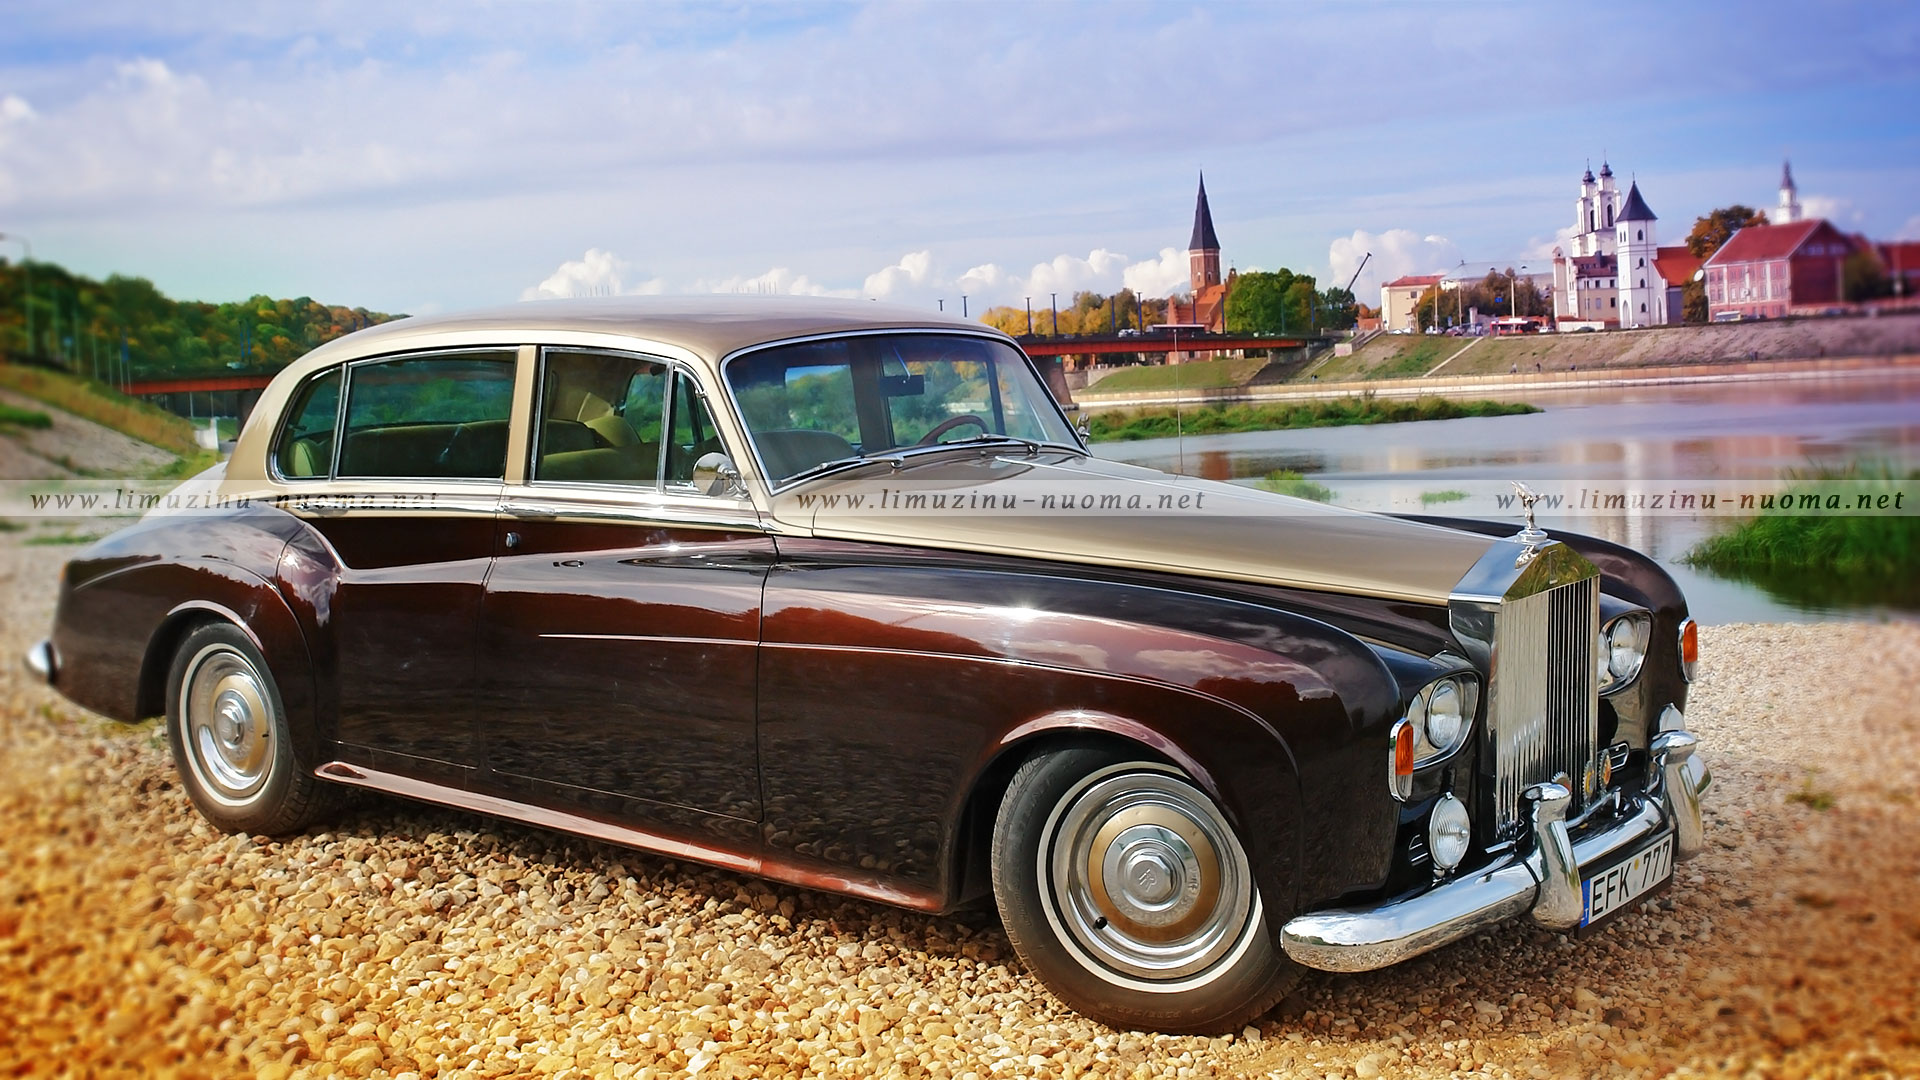 theme harm pay Rolls Royce nuoma | 1963 m. Modelis